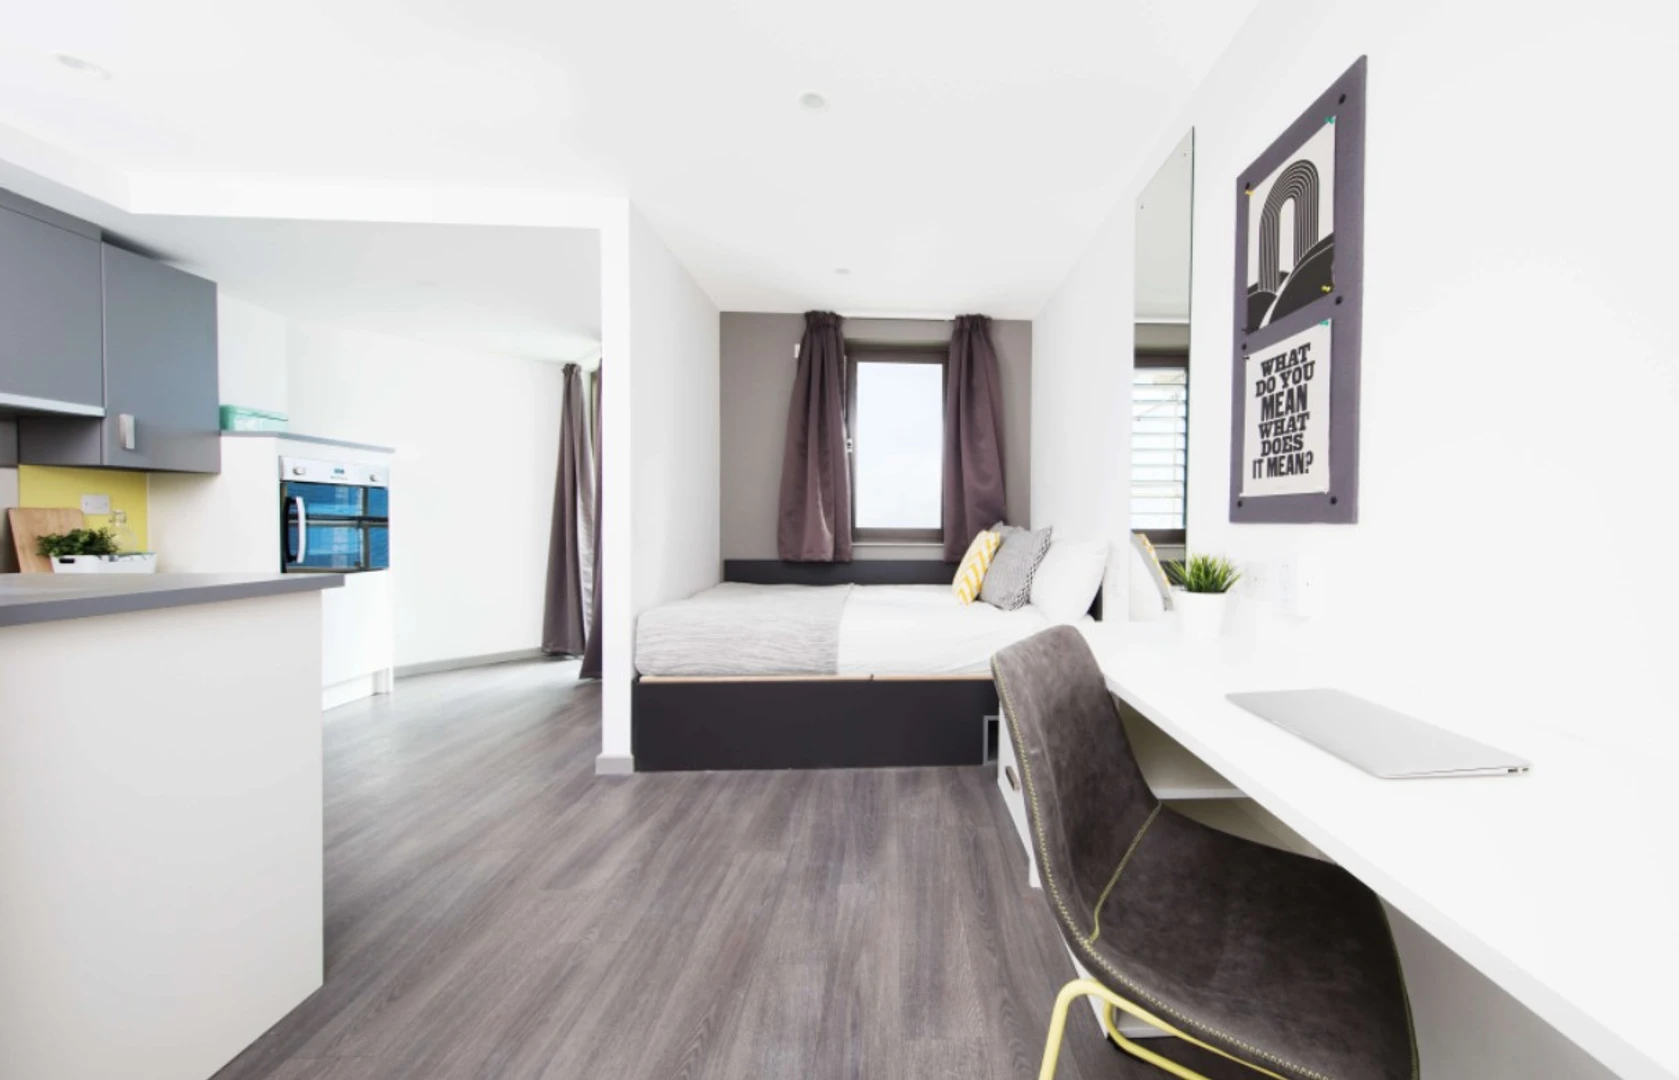 Alquiler de habitación en piso compartido en Newcastle Upon Tyne